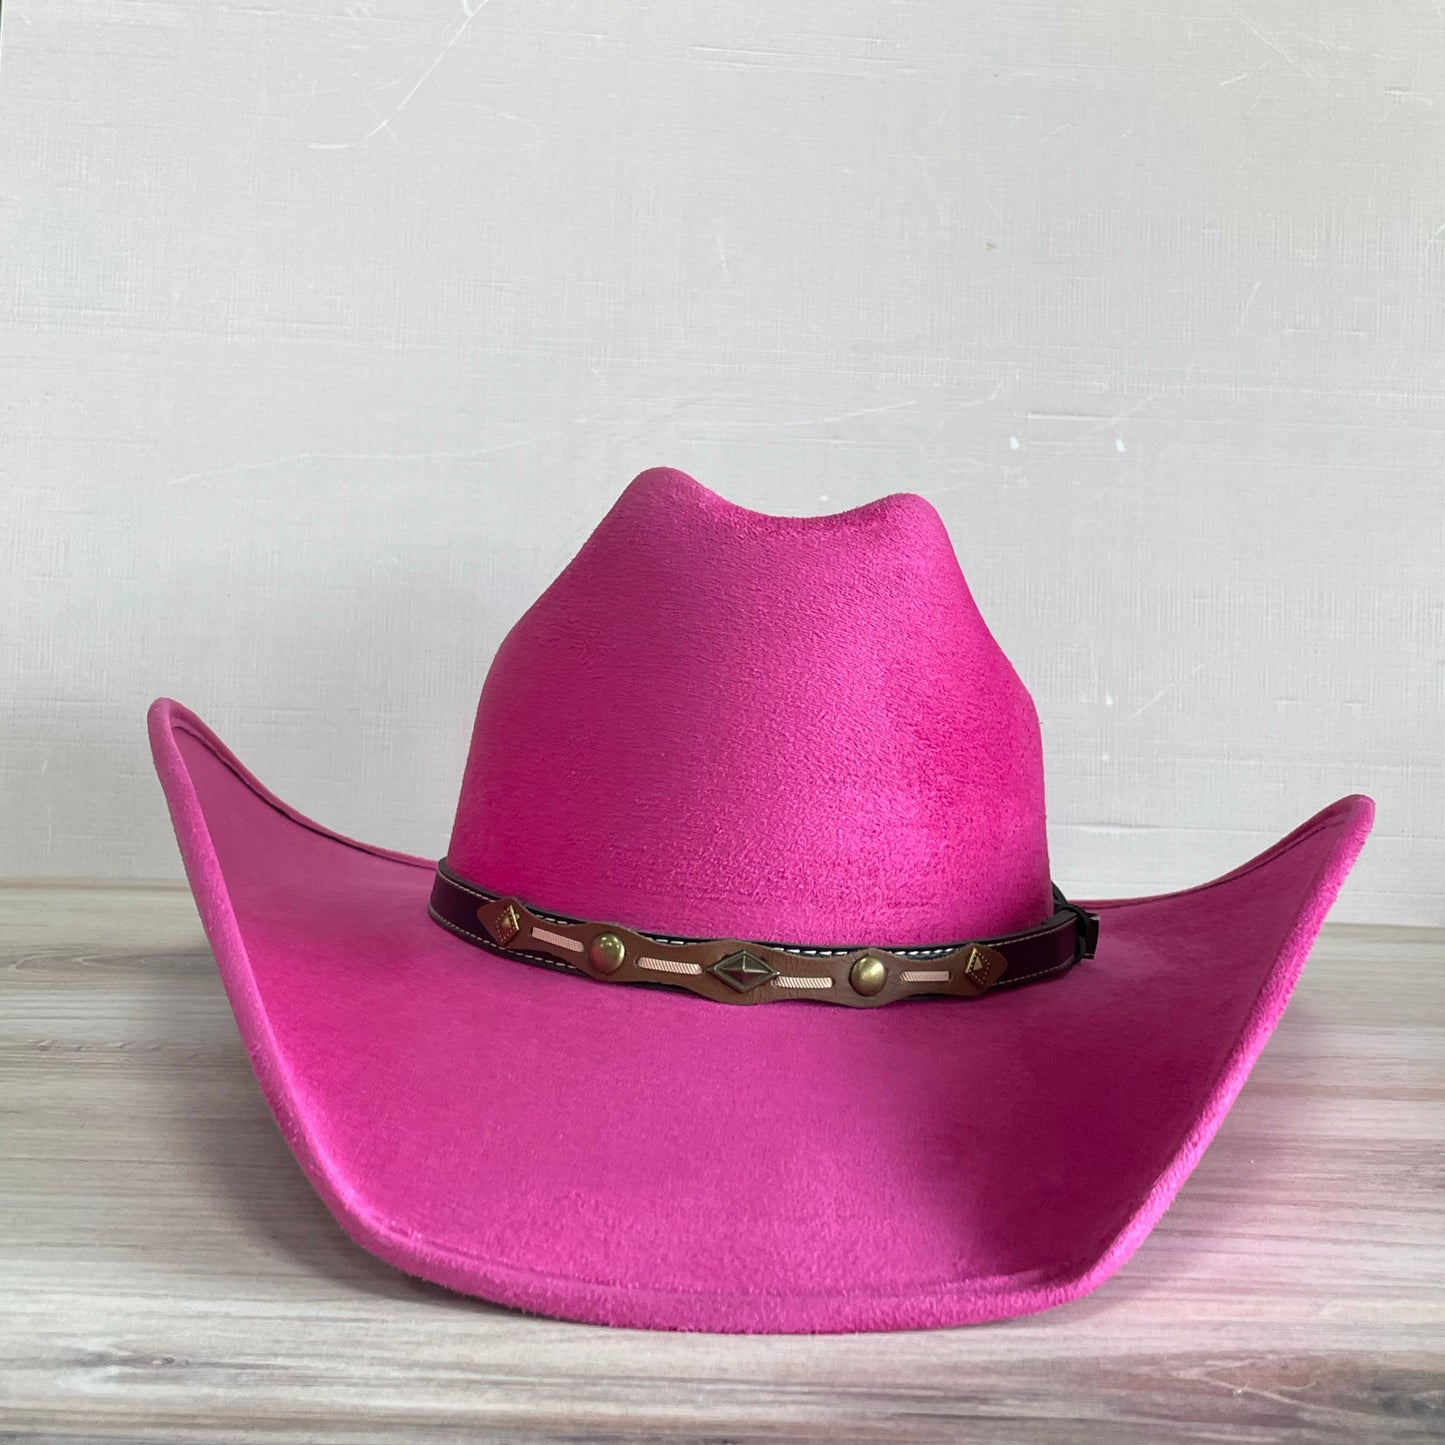 Western Cowboy Suede Hat - Bolona Style